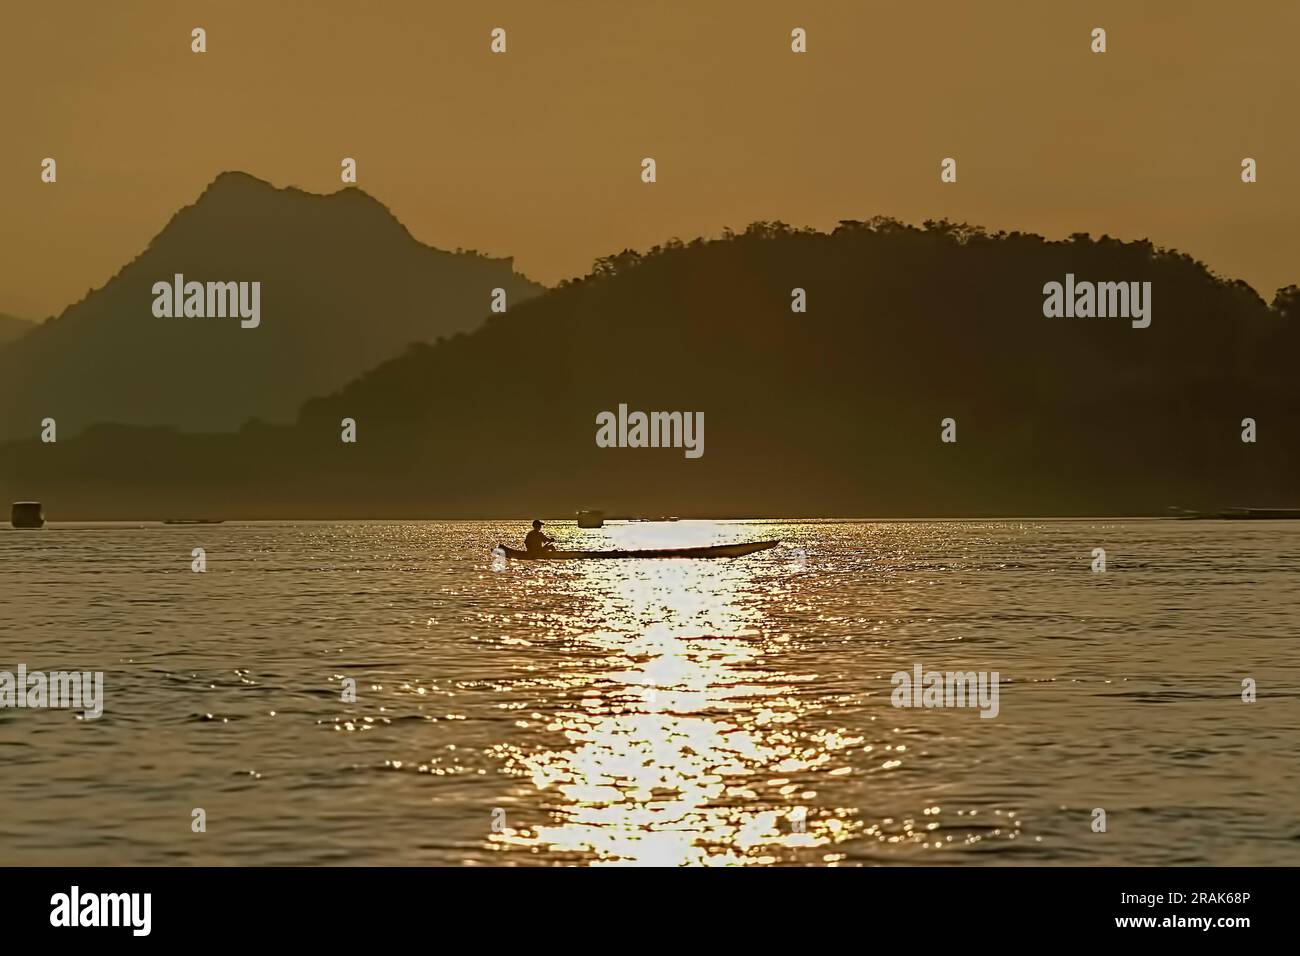 Una barca attraversa il fiume Mekong a Luang Prabang, Laos, durante il tramonto Foto Stock